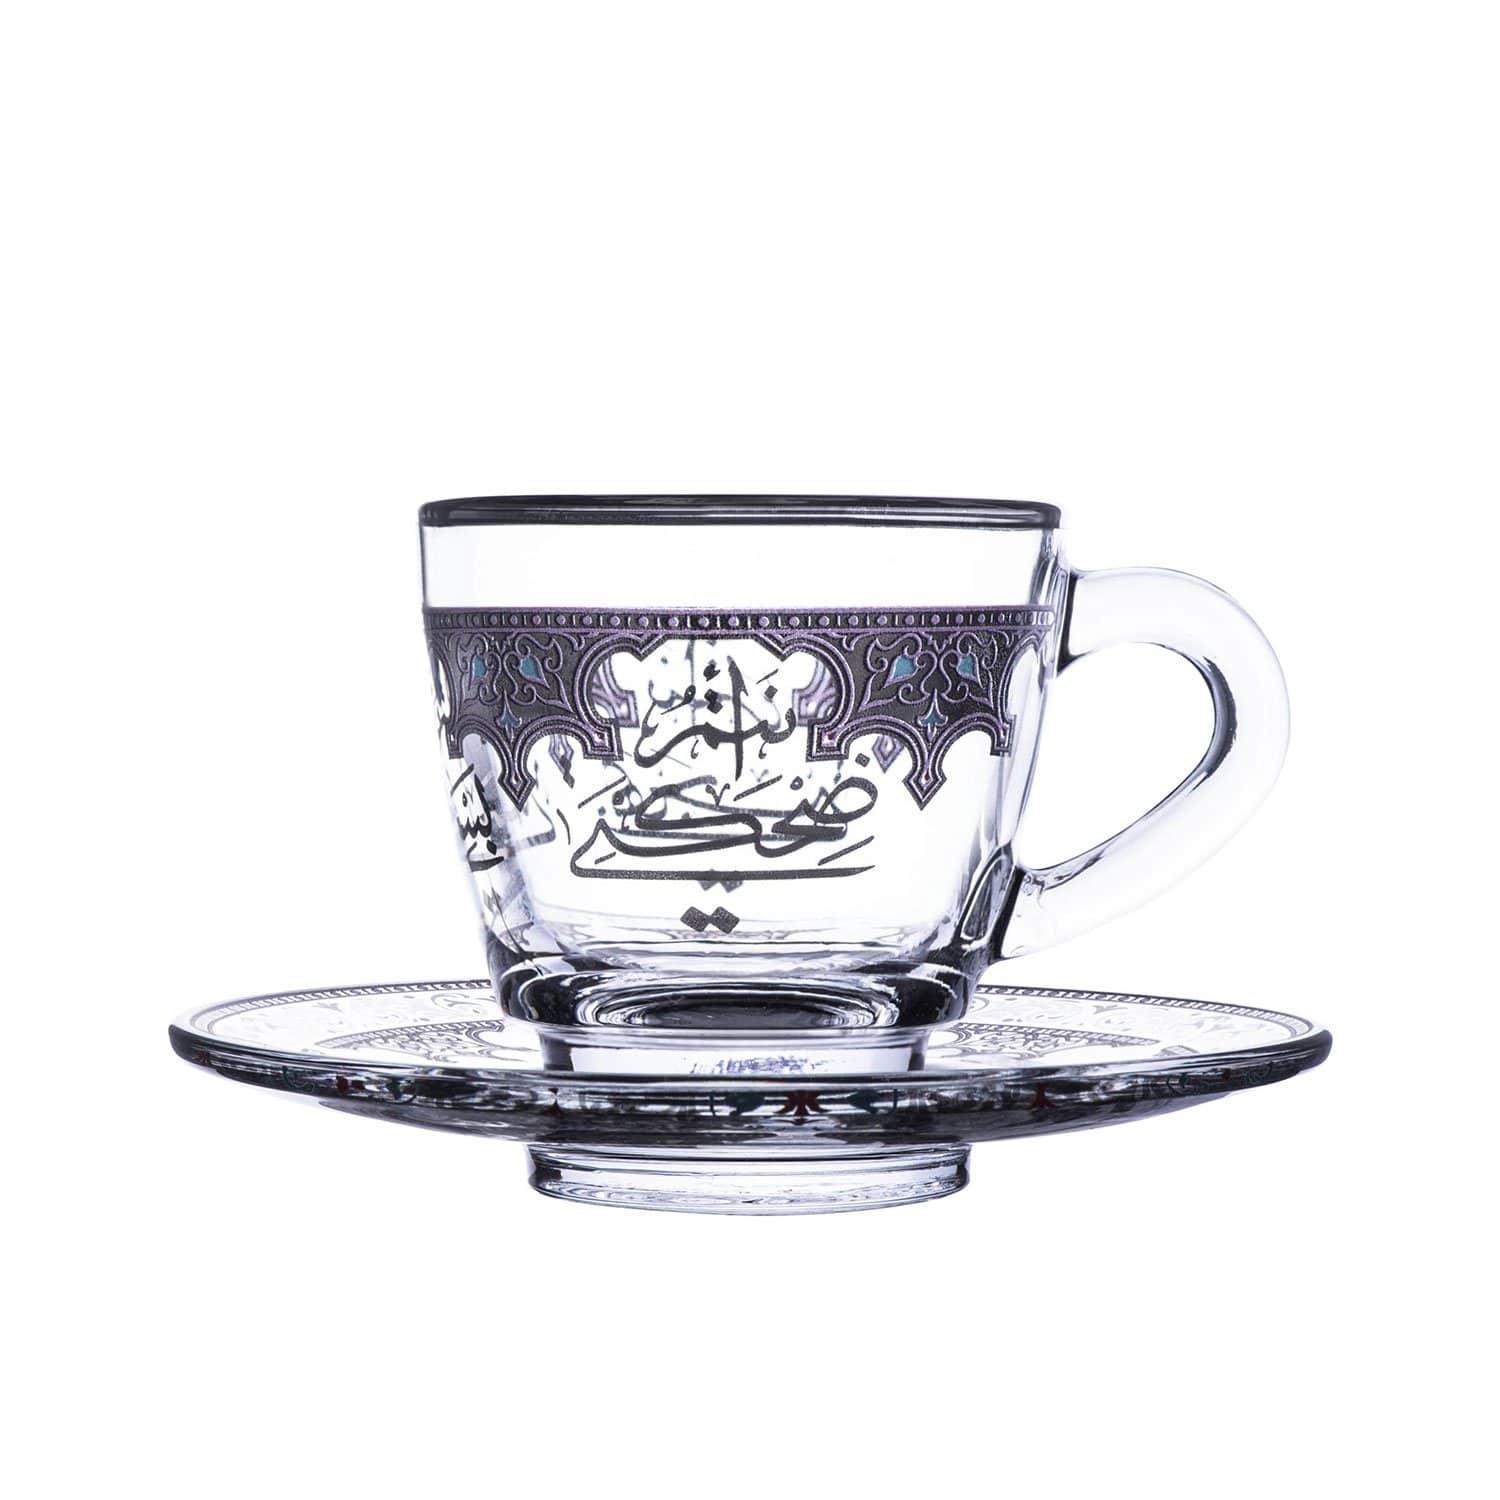 DIMLAJ SUROOR 12PC COFFEE CUP AND SAUCER PLATINUM - 46995